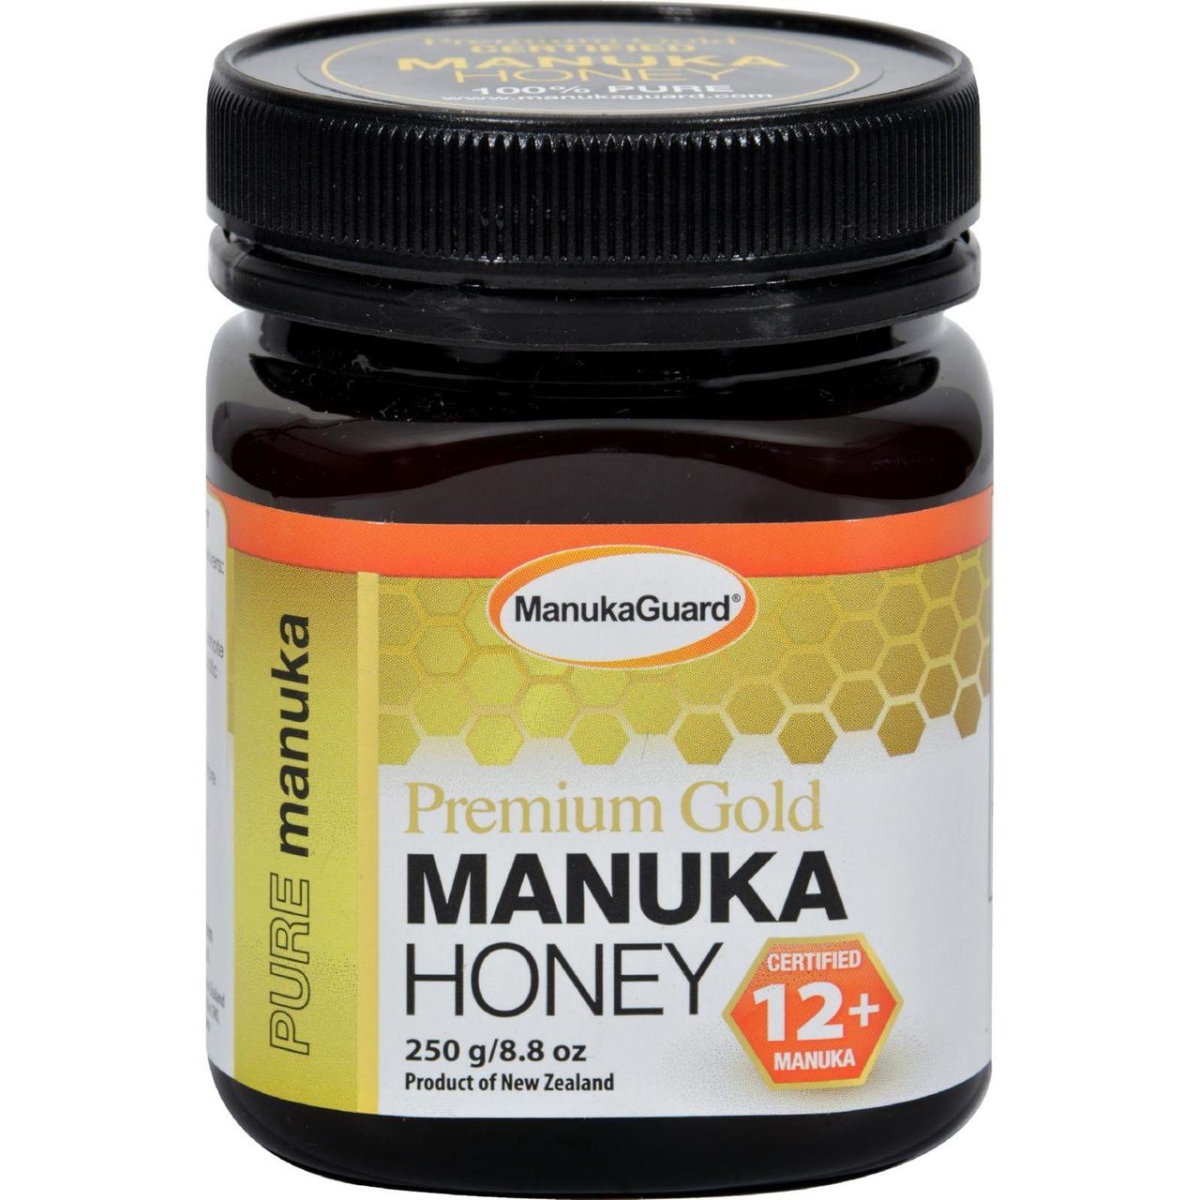 Manukaguard Hg1246149 8.8 Oz Premium Gold Manuka Honey 12 Plus